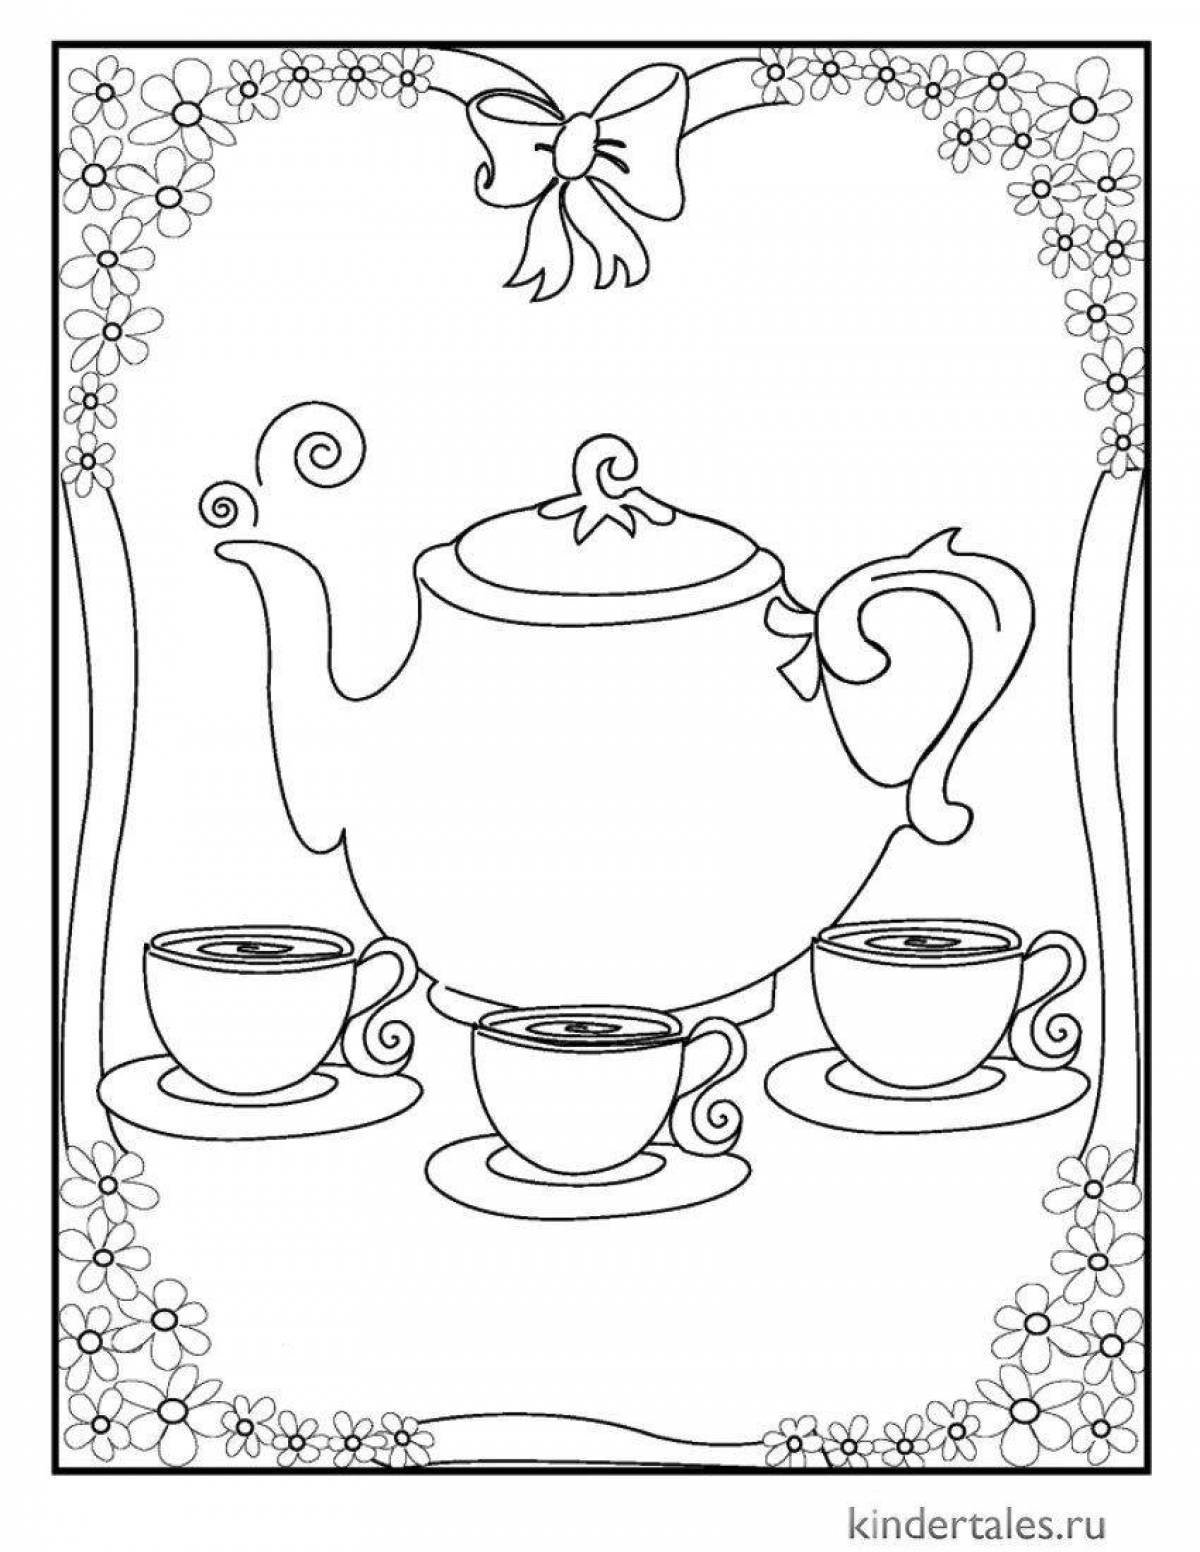 Creative tea set coloring page